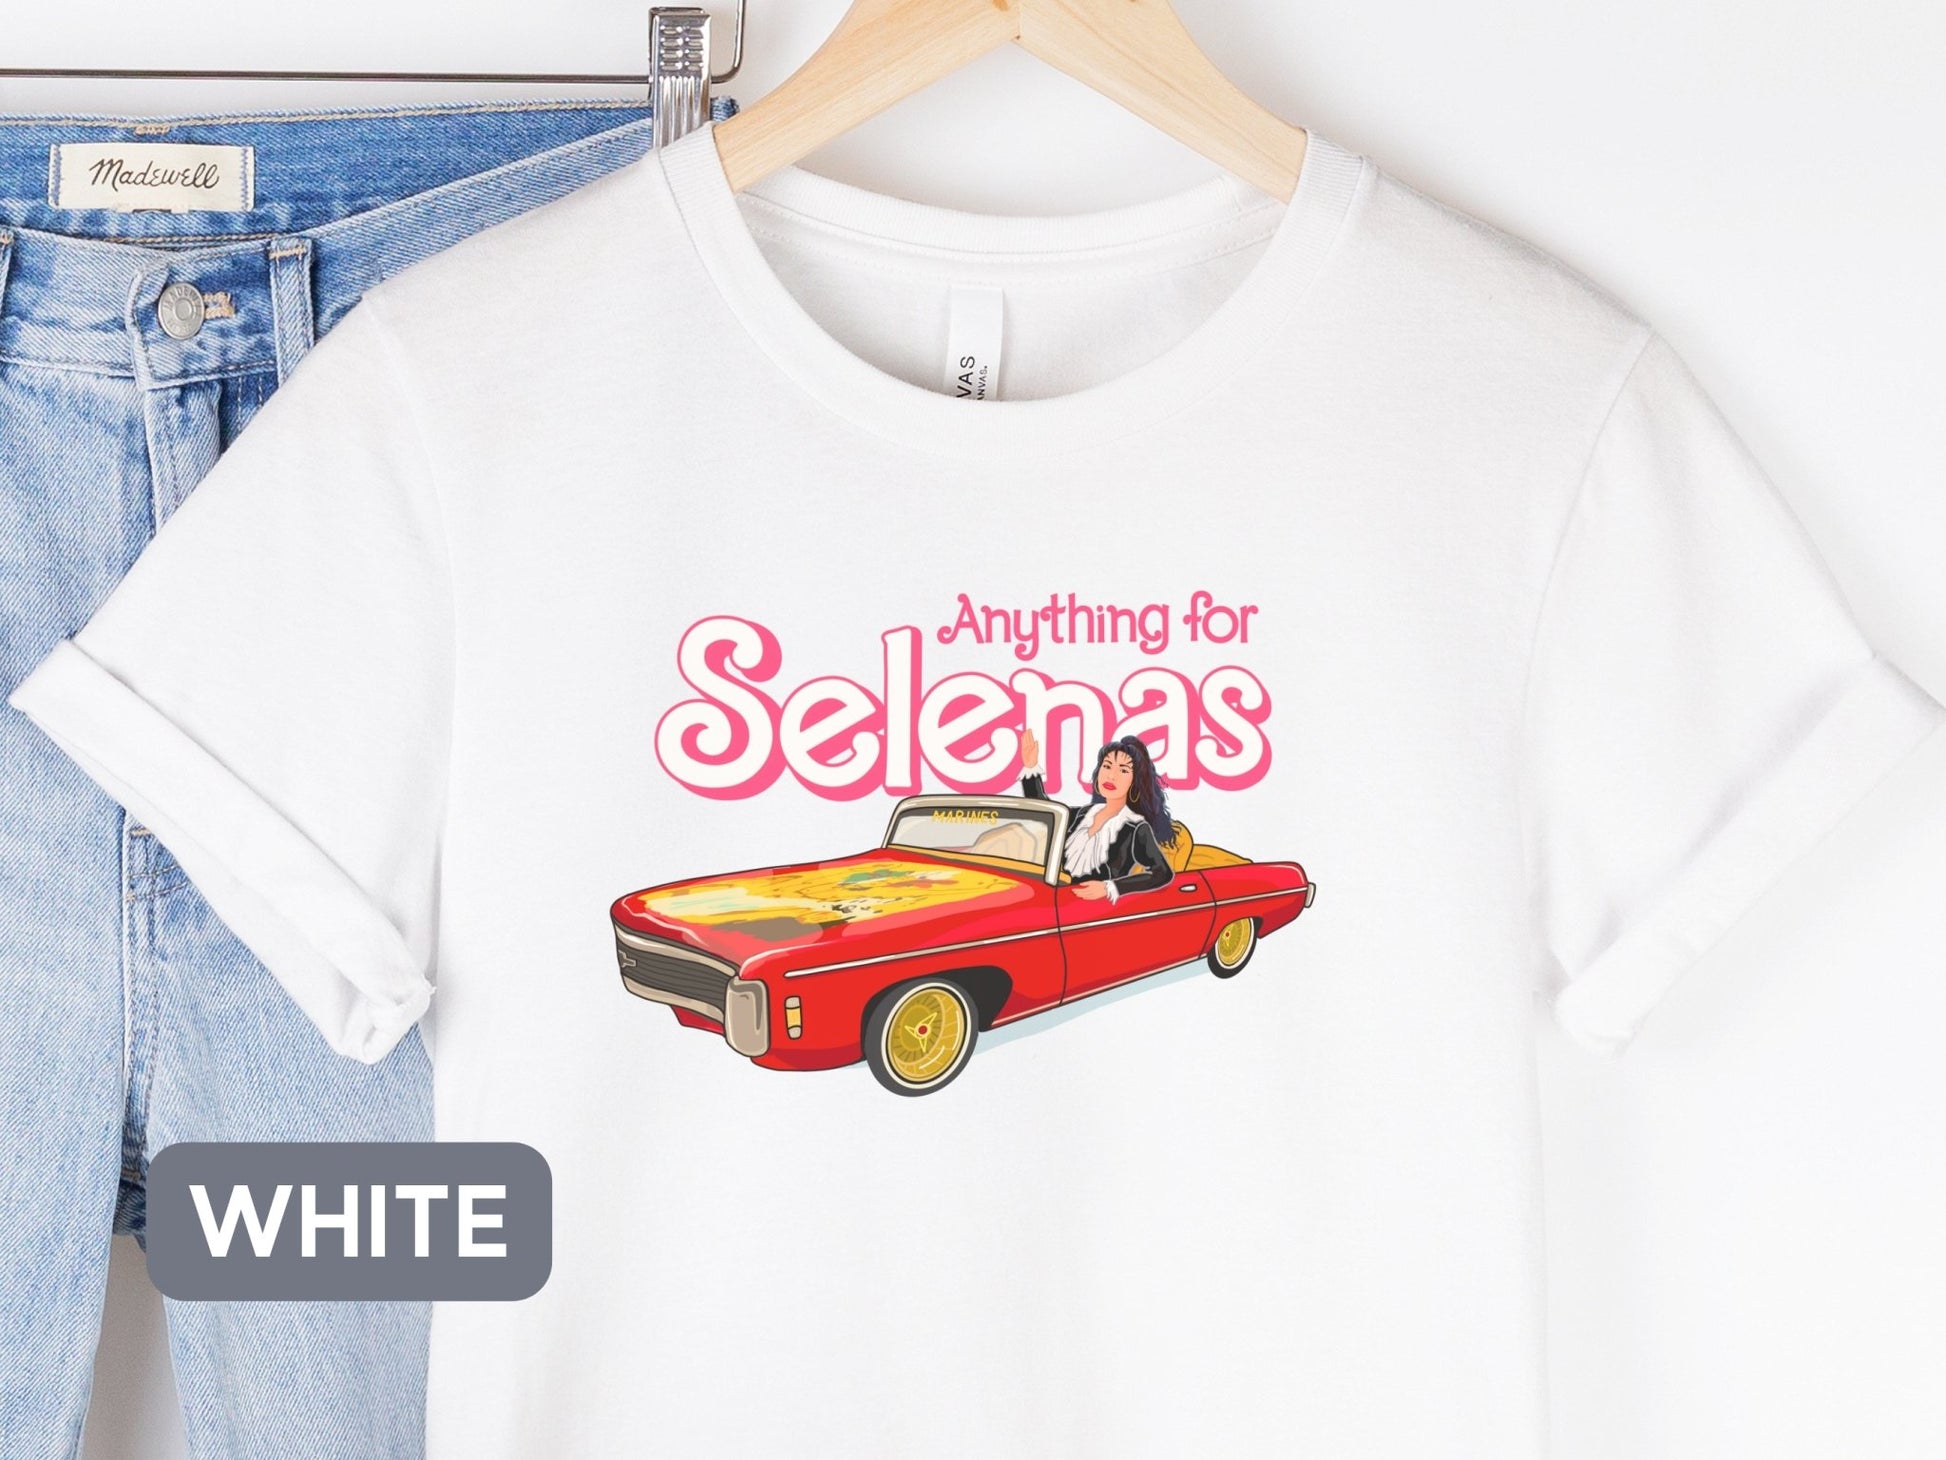 Anything for Selenas Shirt - Marissa Joyner Studio